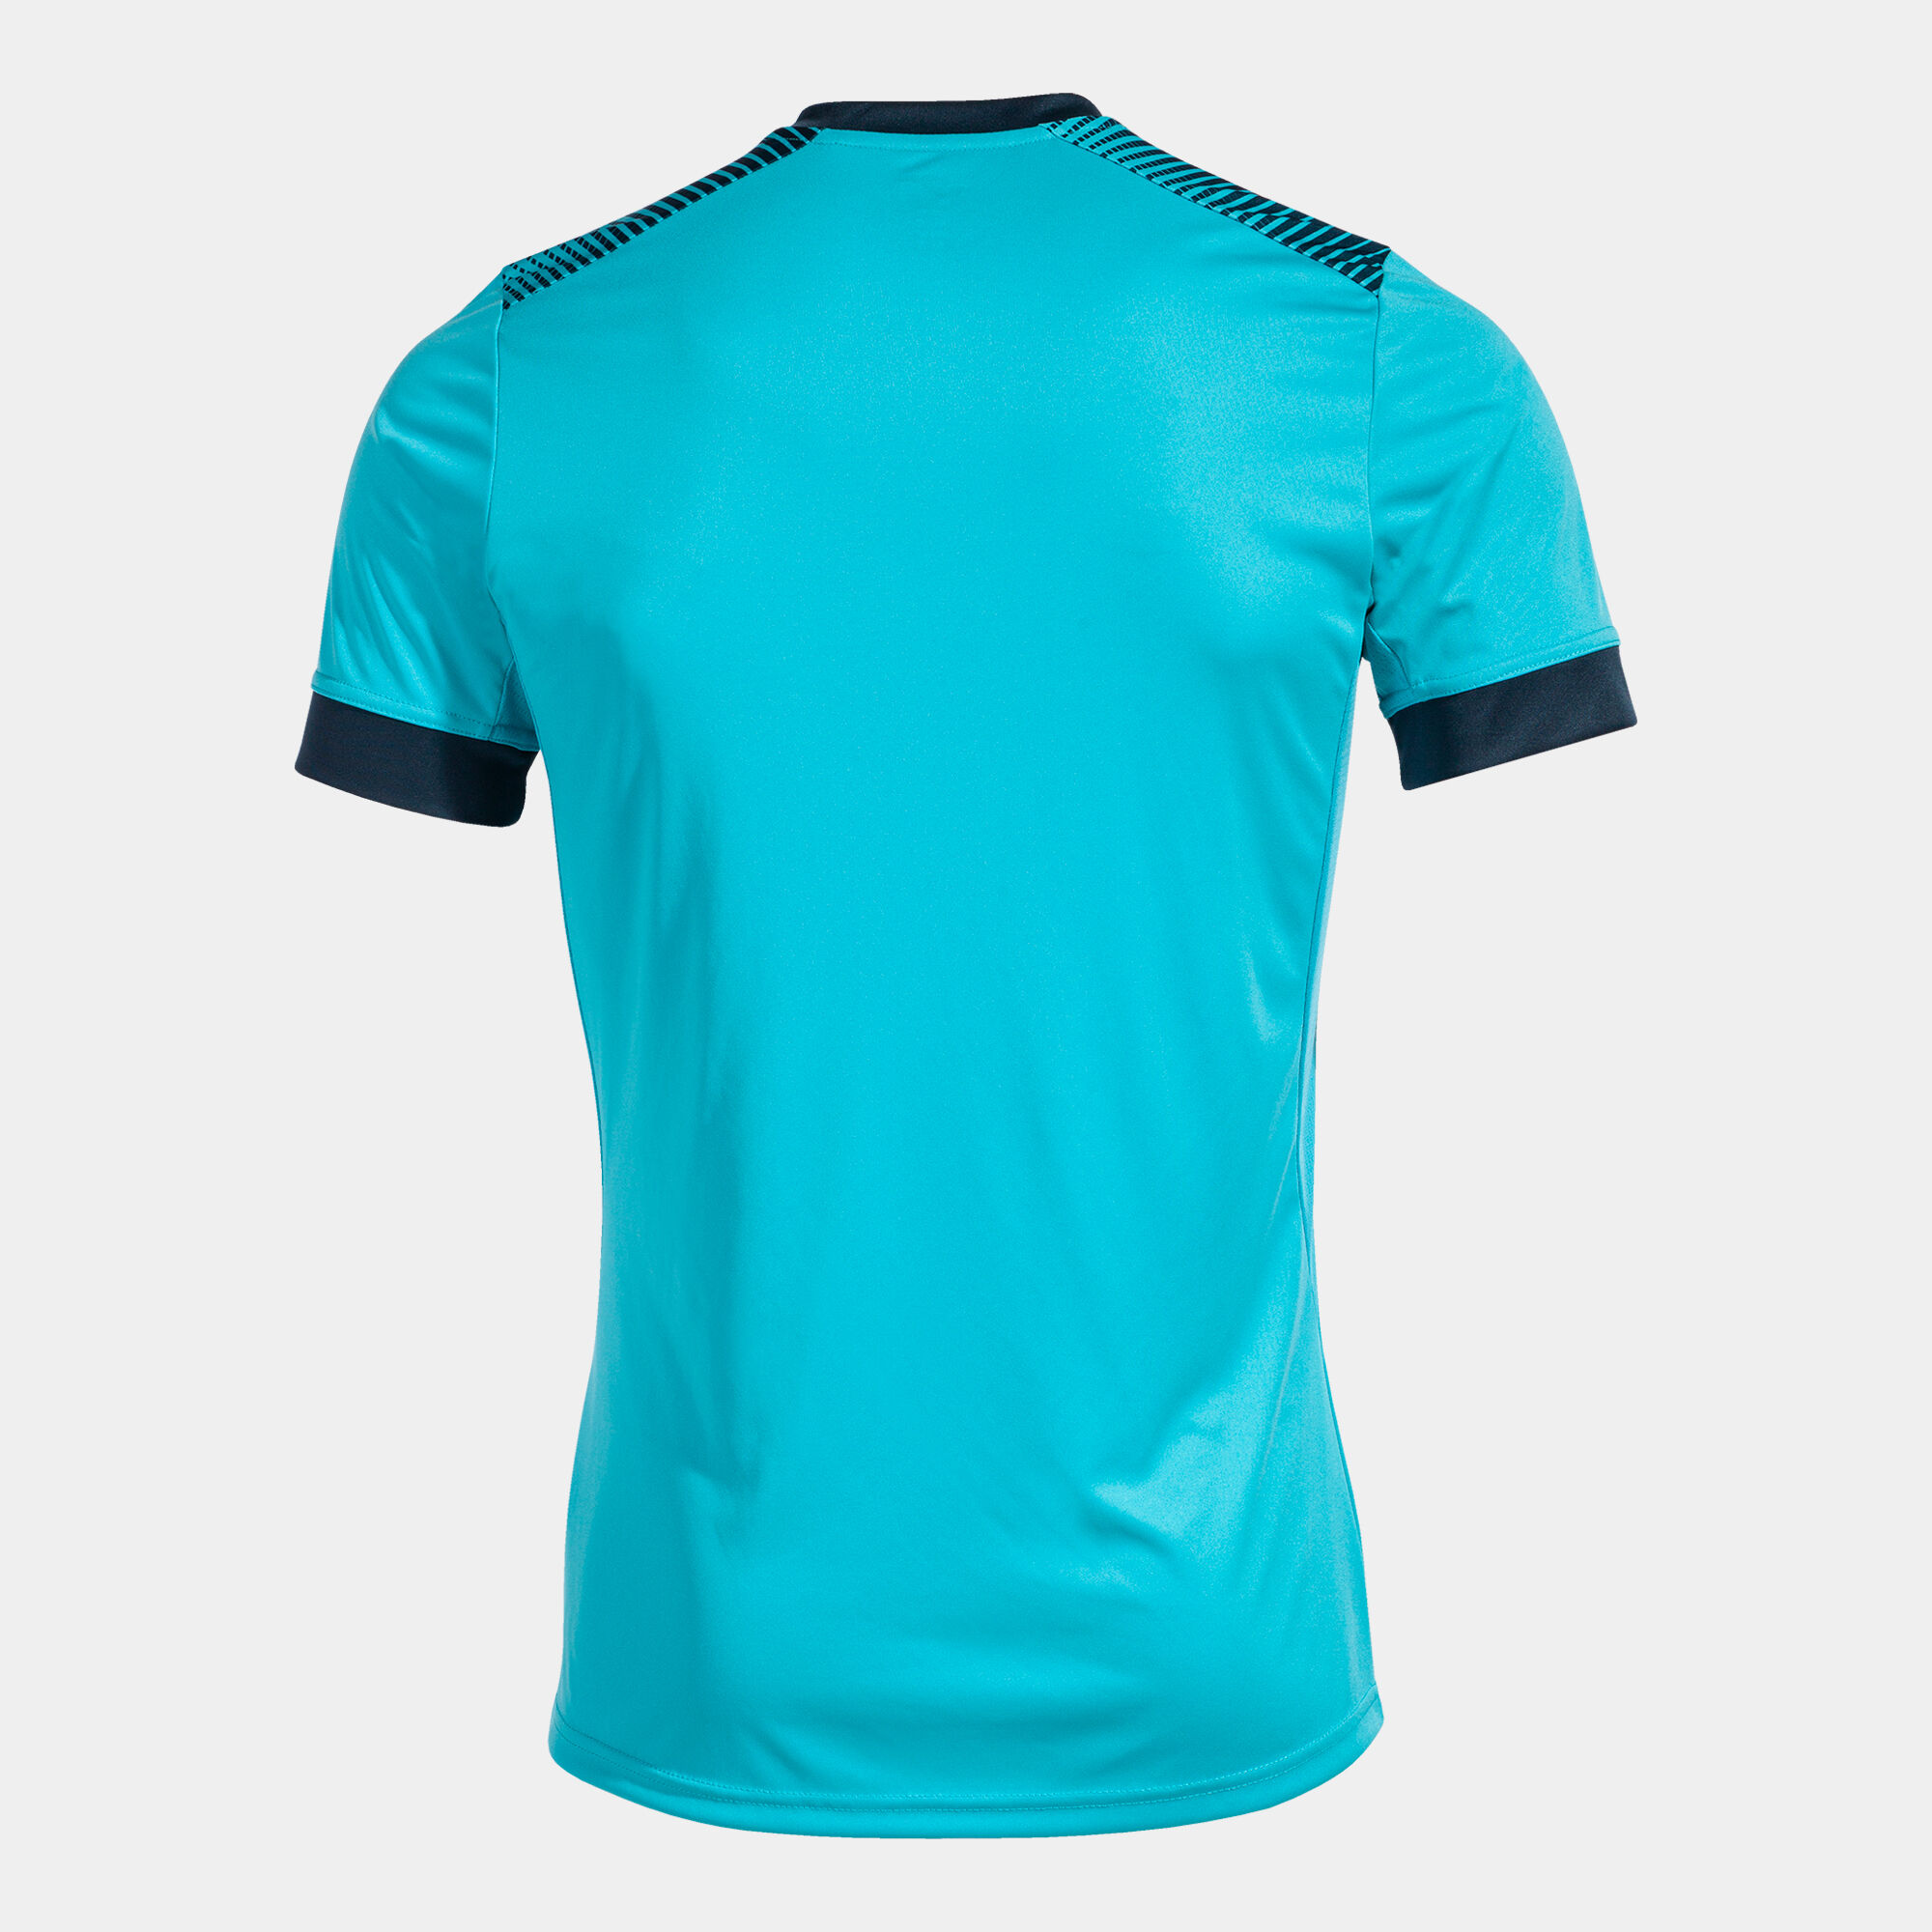 Shirt short sleeve man Eco Supernova fluorescent turquoise navy blue